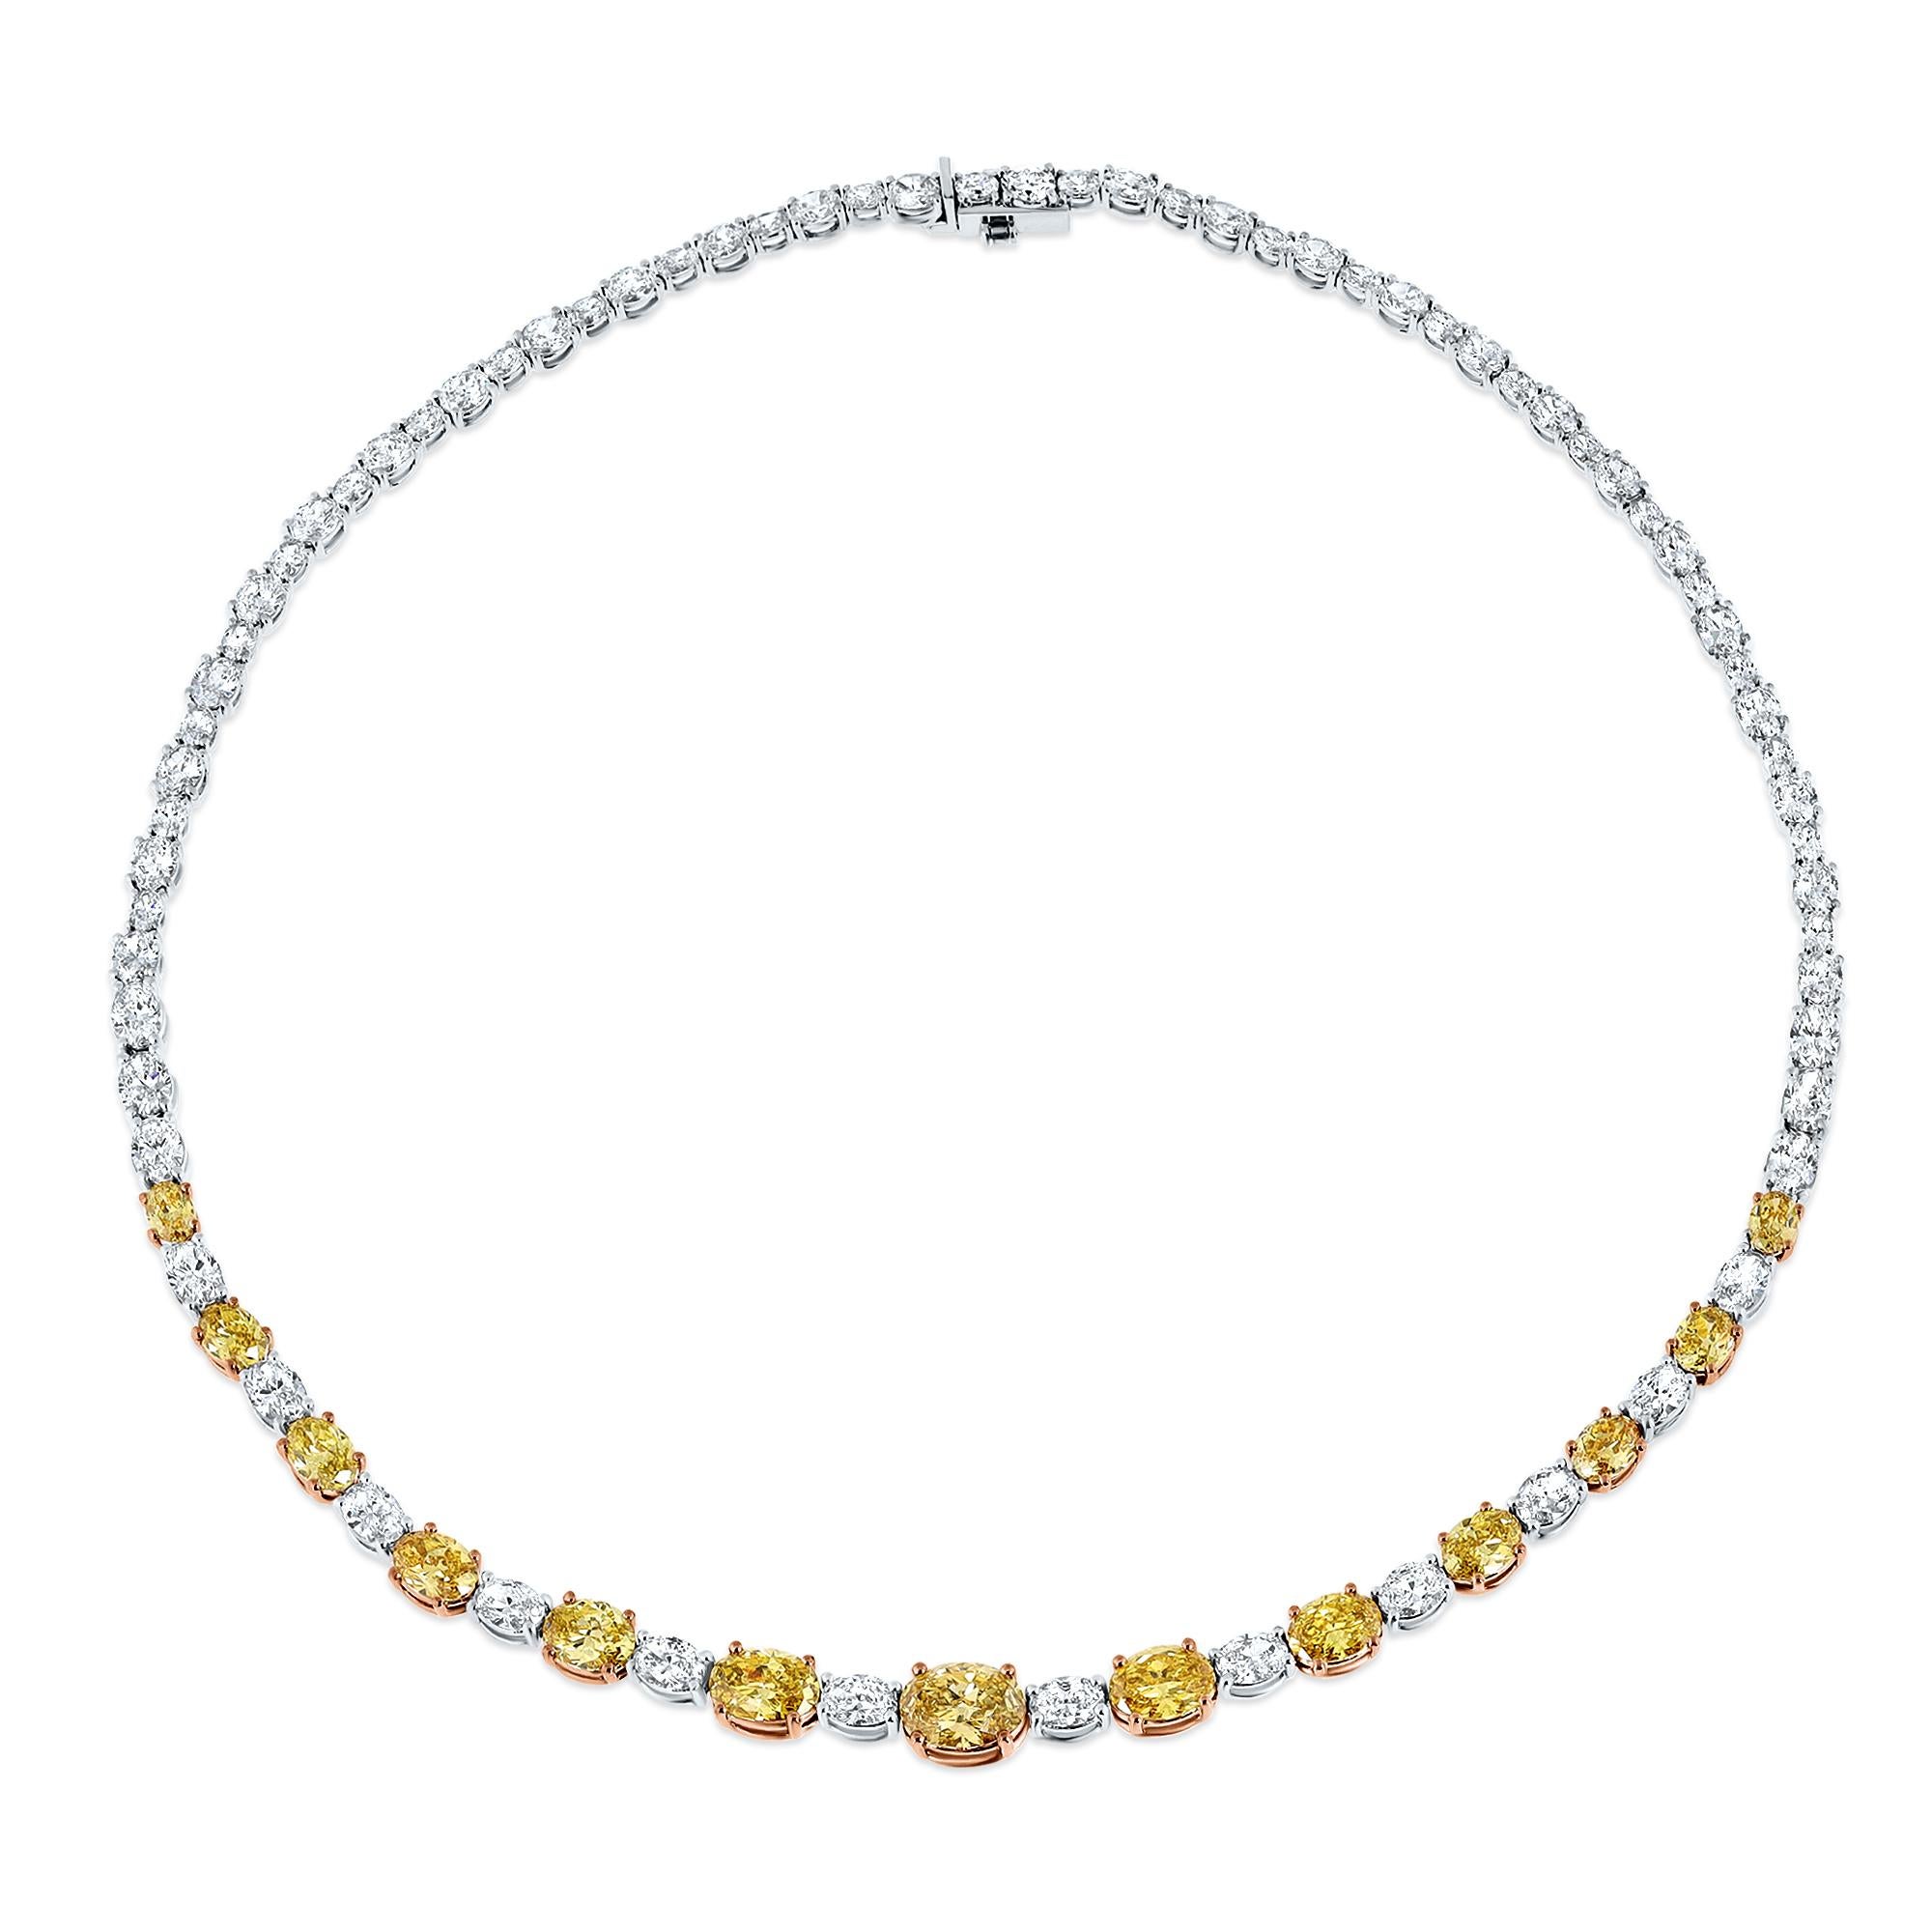 Oval Cut 20.55 Carat Red Carpet Fancy Vivid Yellow & White Diamonds Necklace, 18K Gold. For Sale